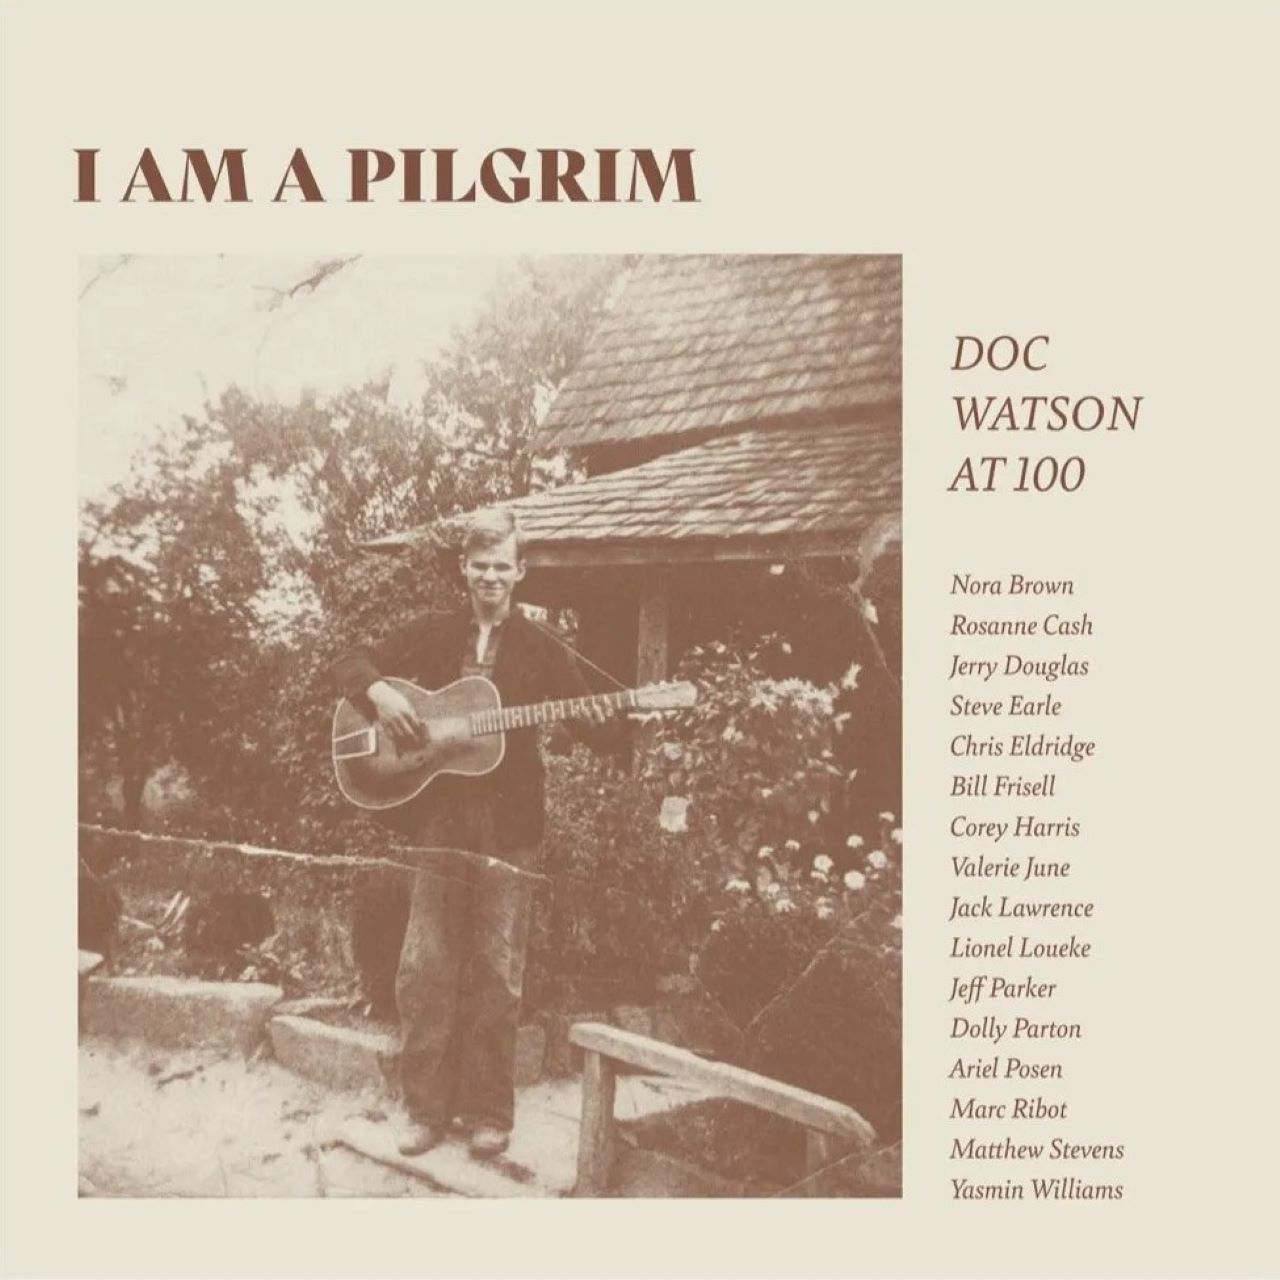 DOC WATSON - I Am A Pilgrim Doc Watson At 100 cover album